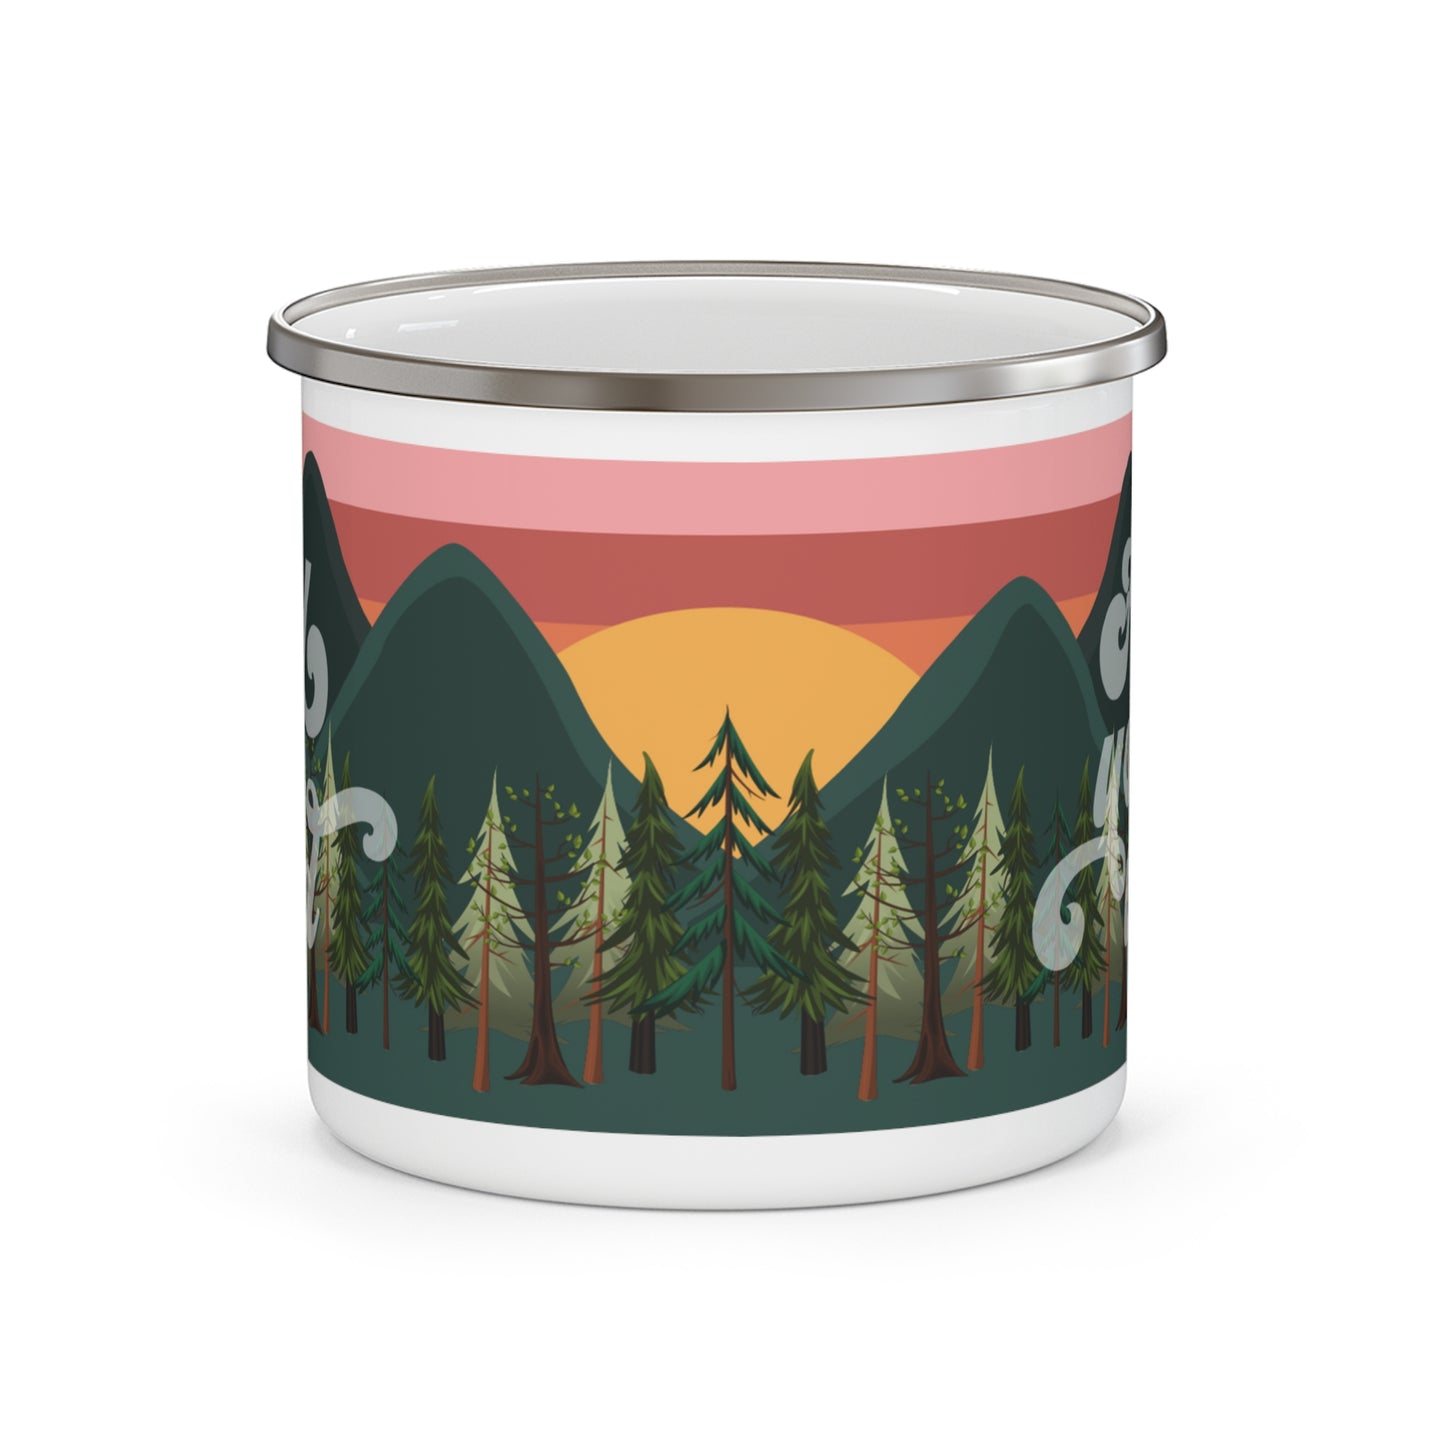 Find Your Wild Enamel Camping Mug